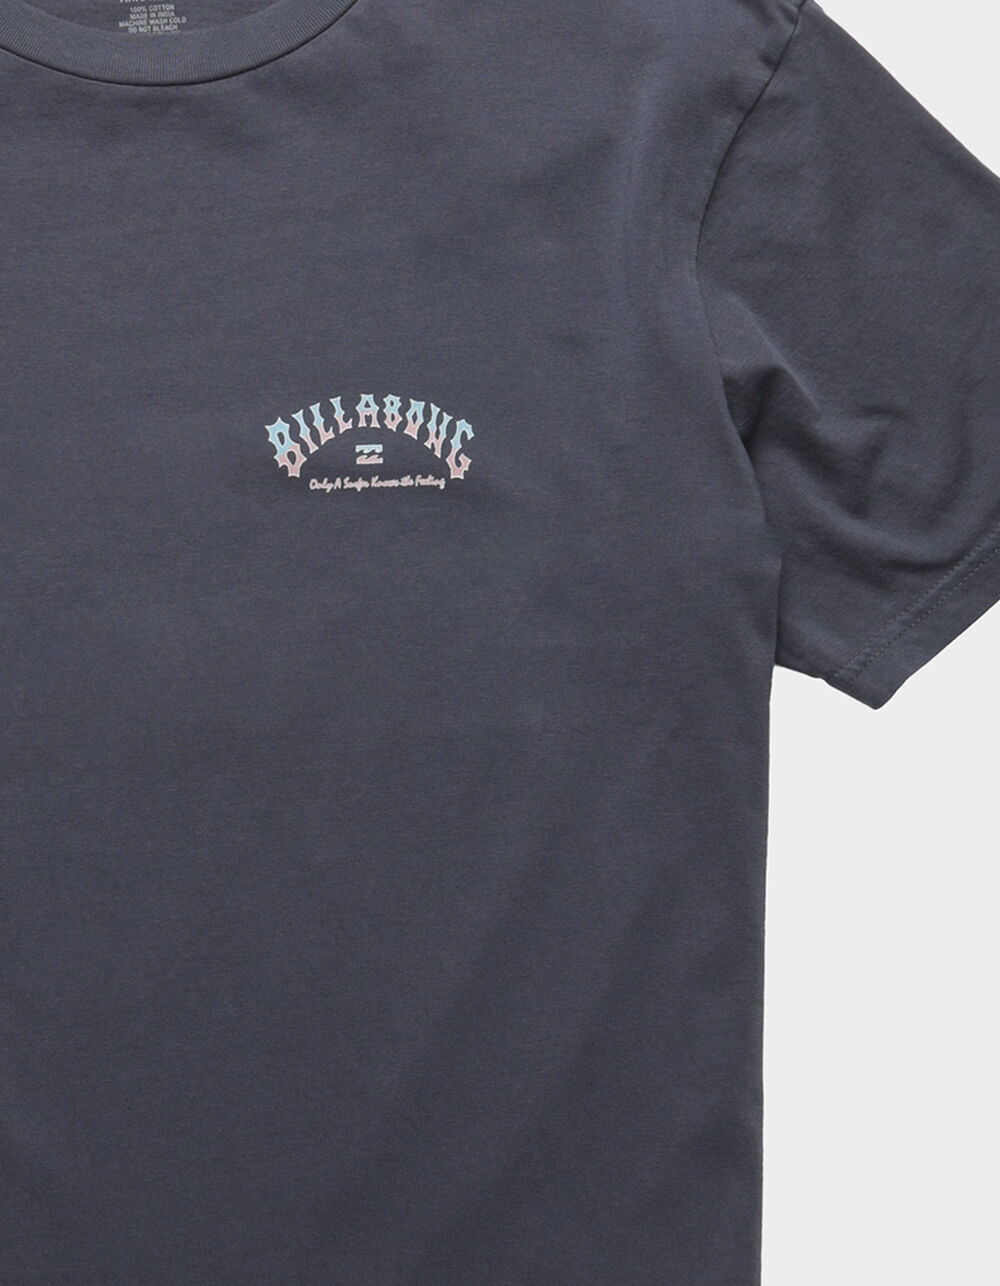 BILLABONG Arch Wave Washed Mens T-Shirt - CHARC | Tillys